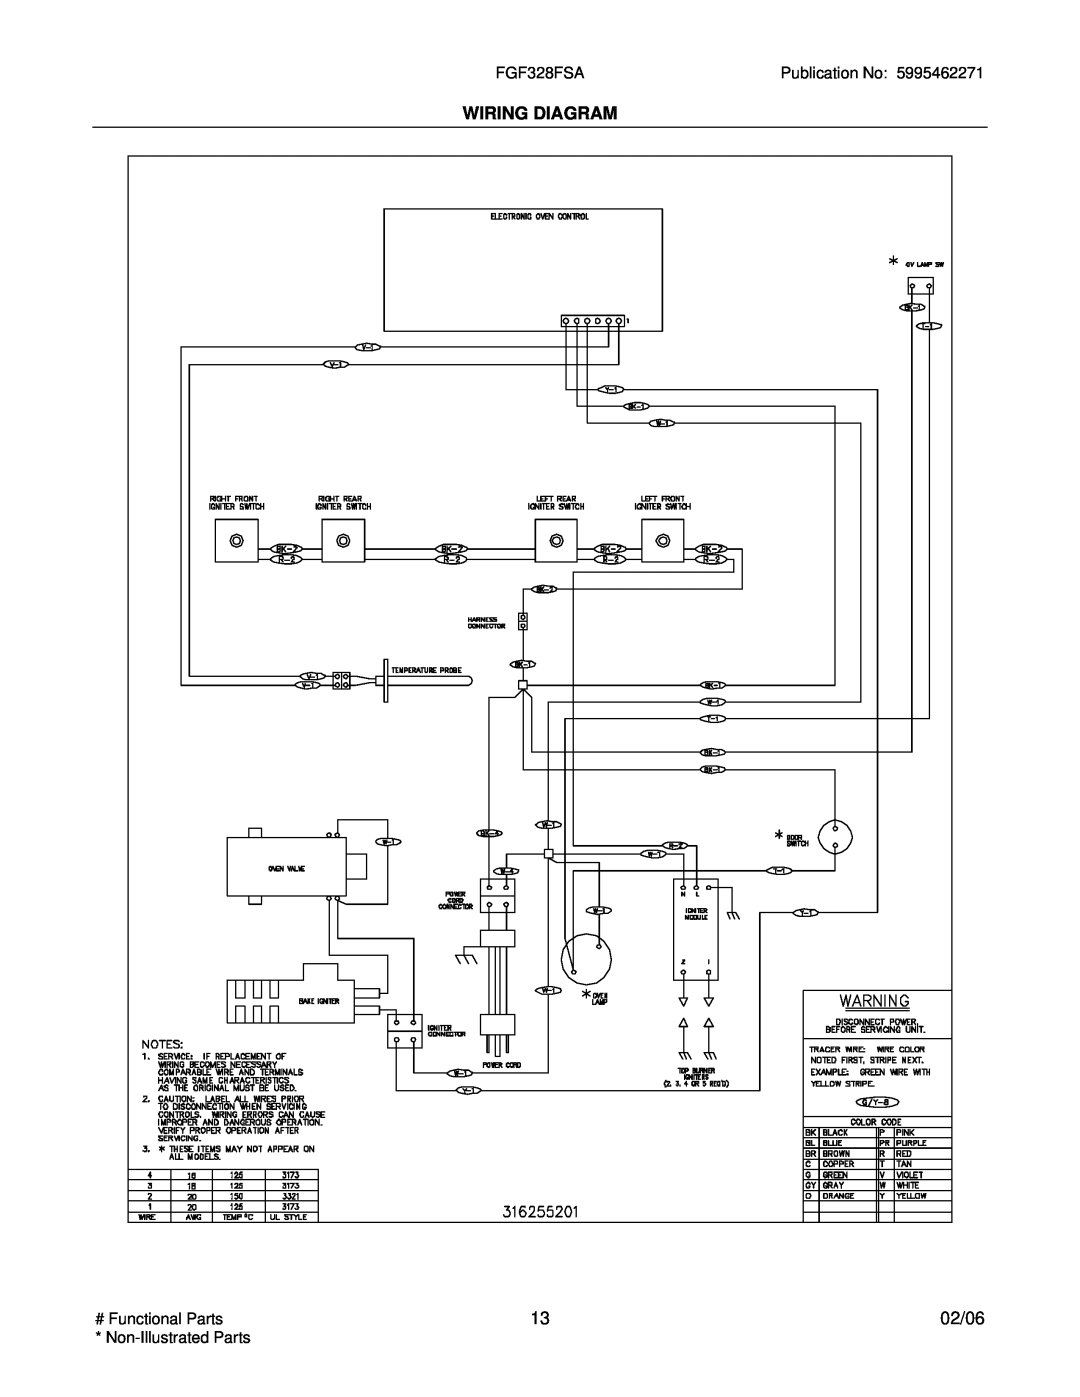 Frigidaire FGF328F installation instructions Wiring Diagram, 02/06, Publication No 